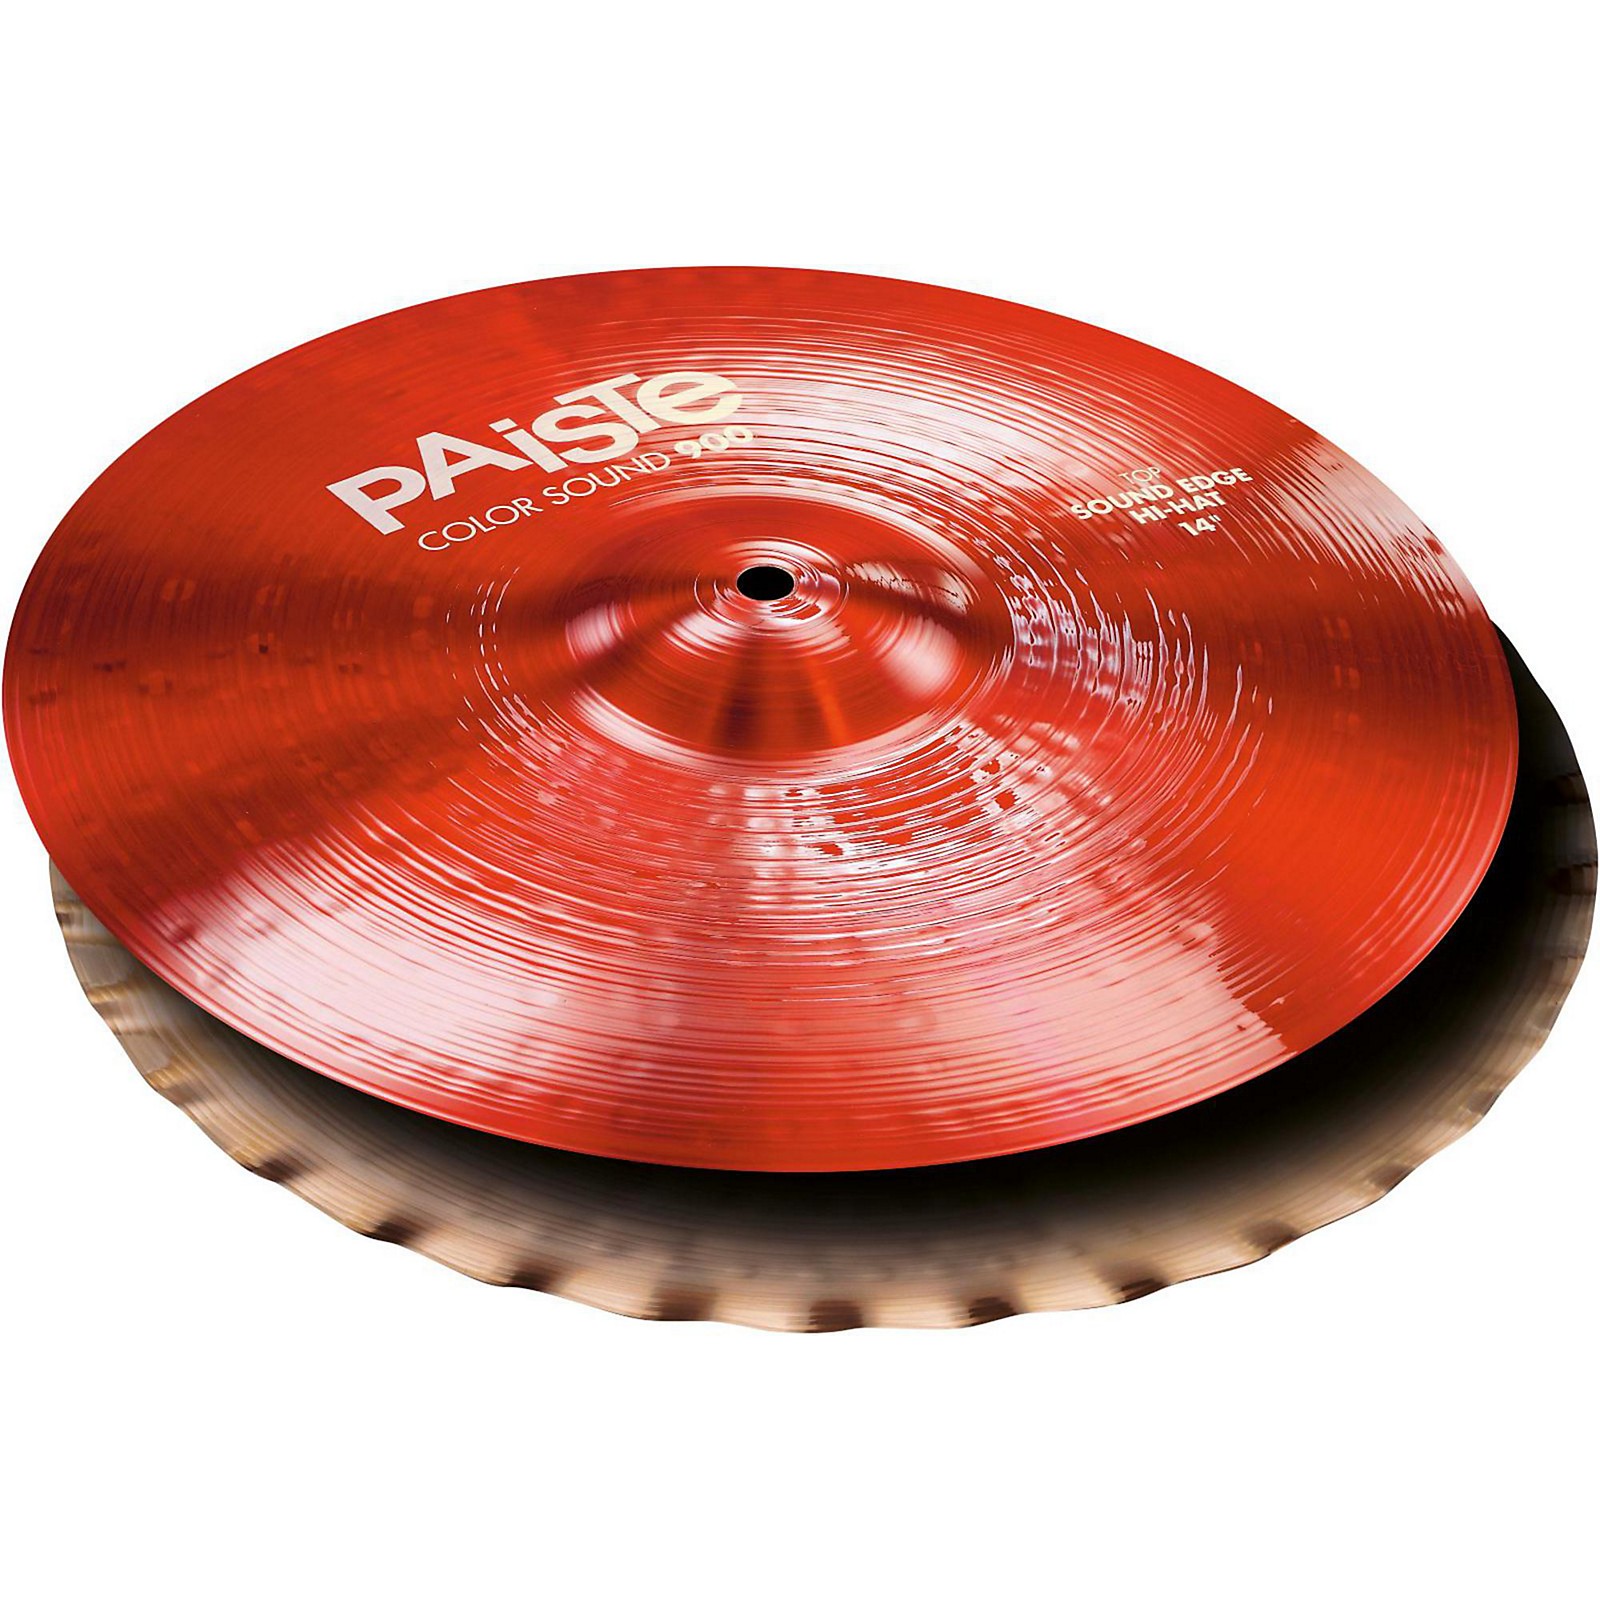 Paiste Paiste Colorsound 900 Sound Edge Hi Hat Cymbal Red